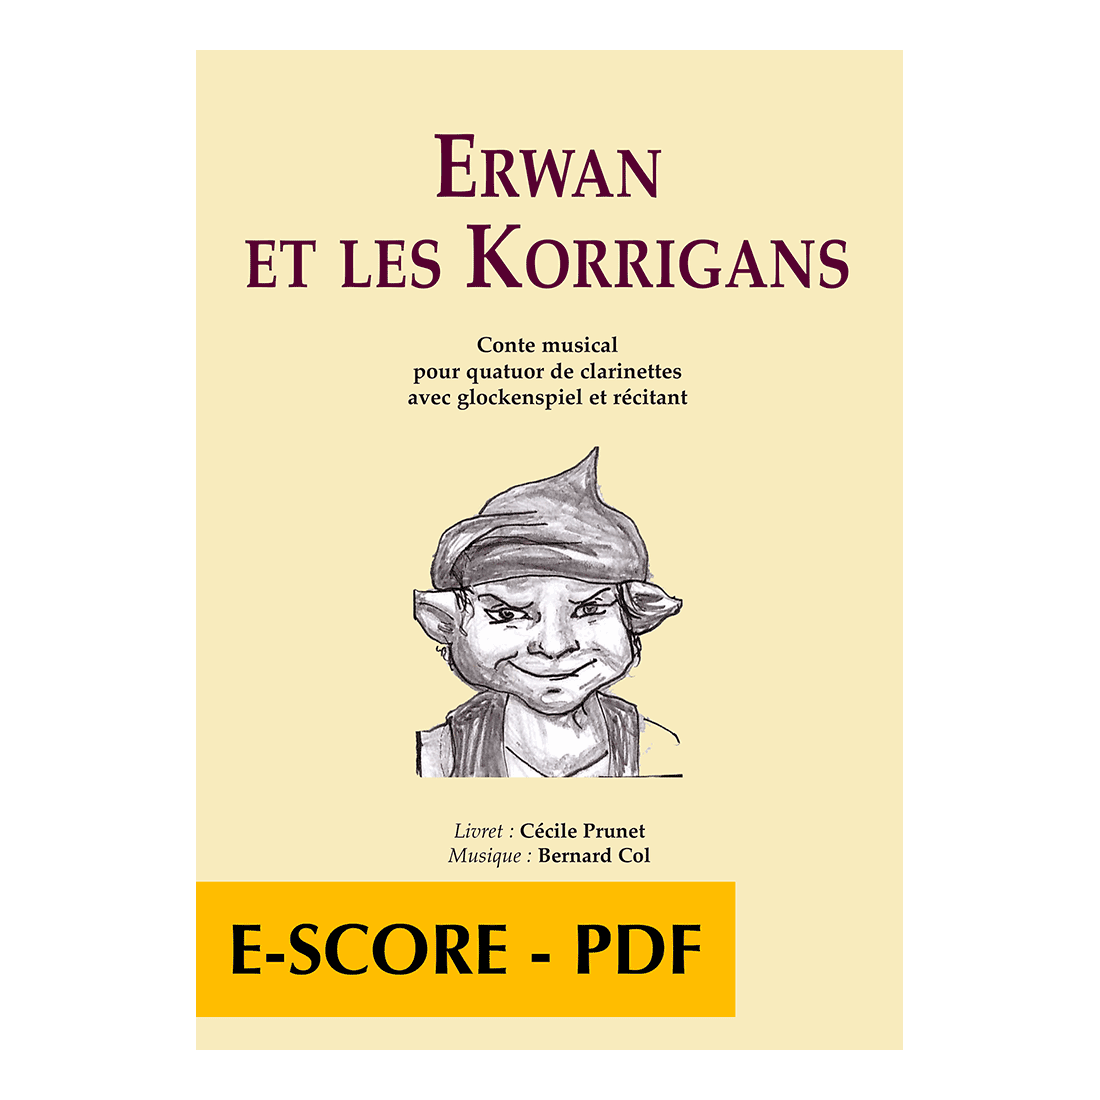 Erwan et les Korrigans - Musical tale for clarinet quartet, narrator and glockenspiel - E-score PDF